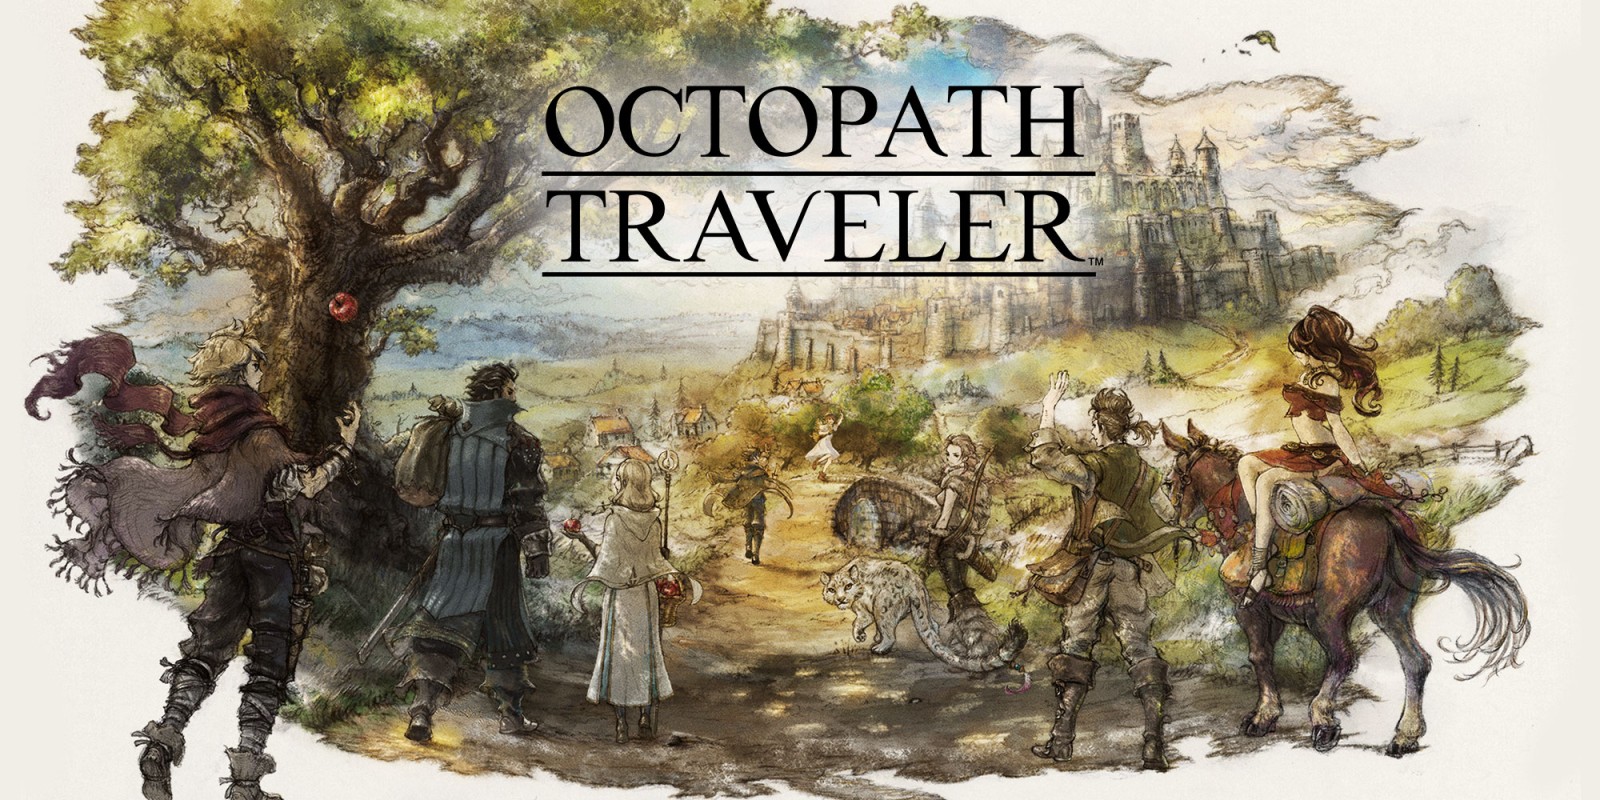 [Rumor] Octopath Traveler rated for PC in Korea